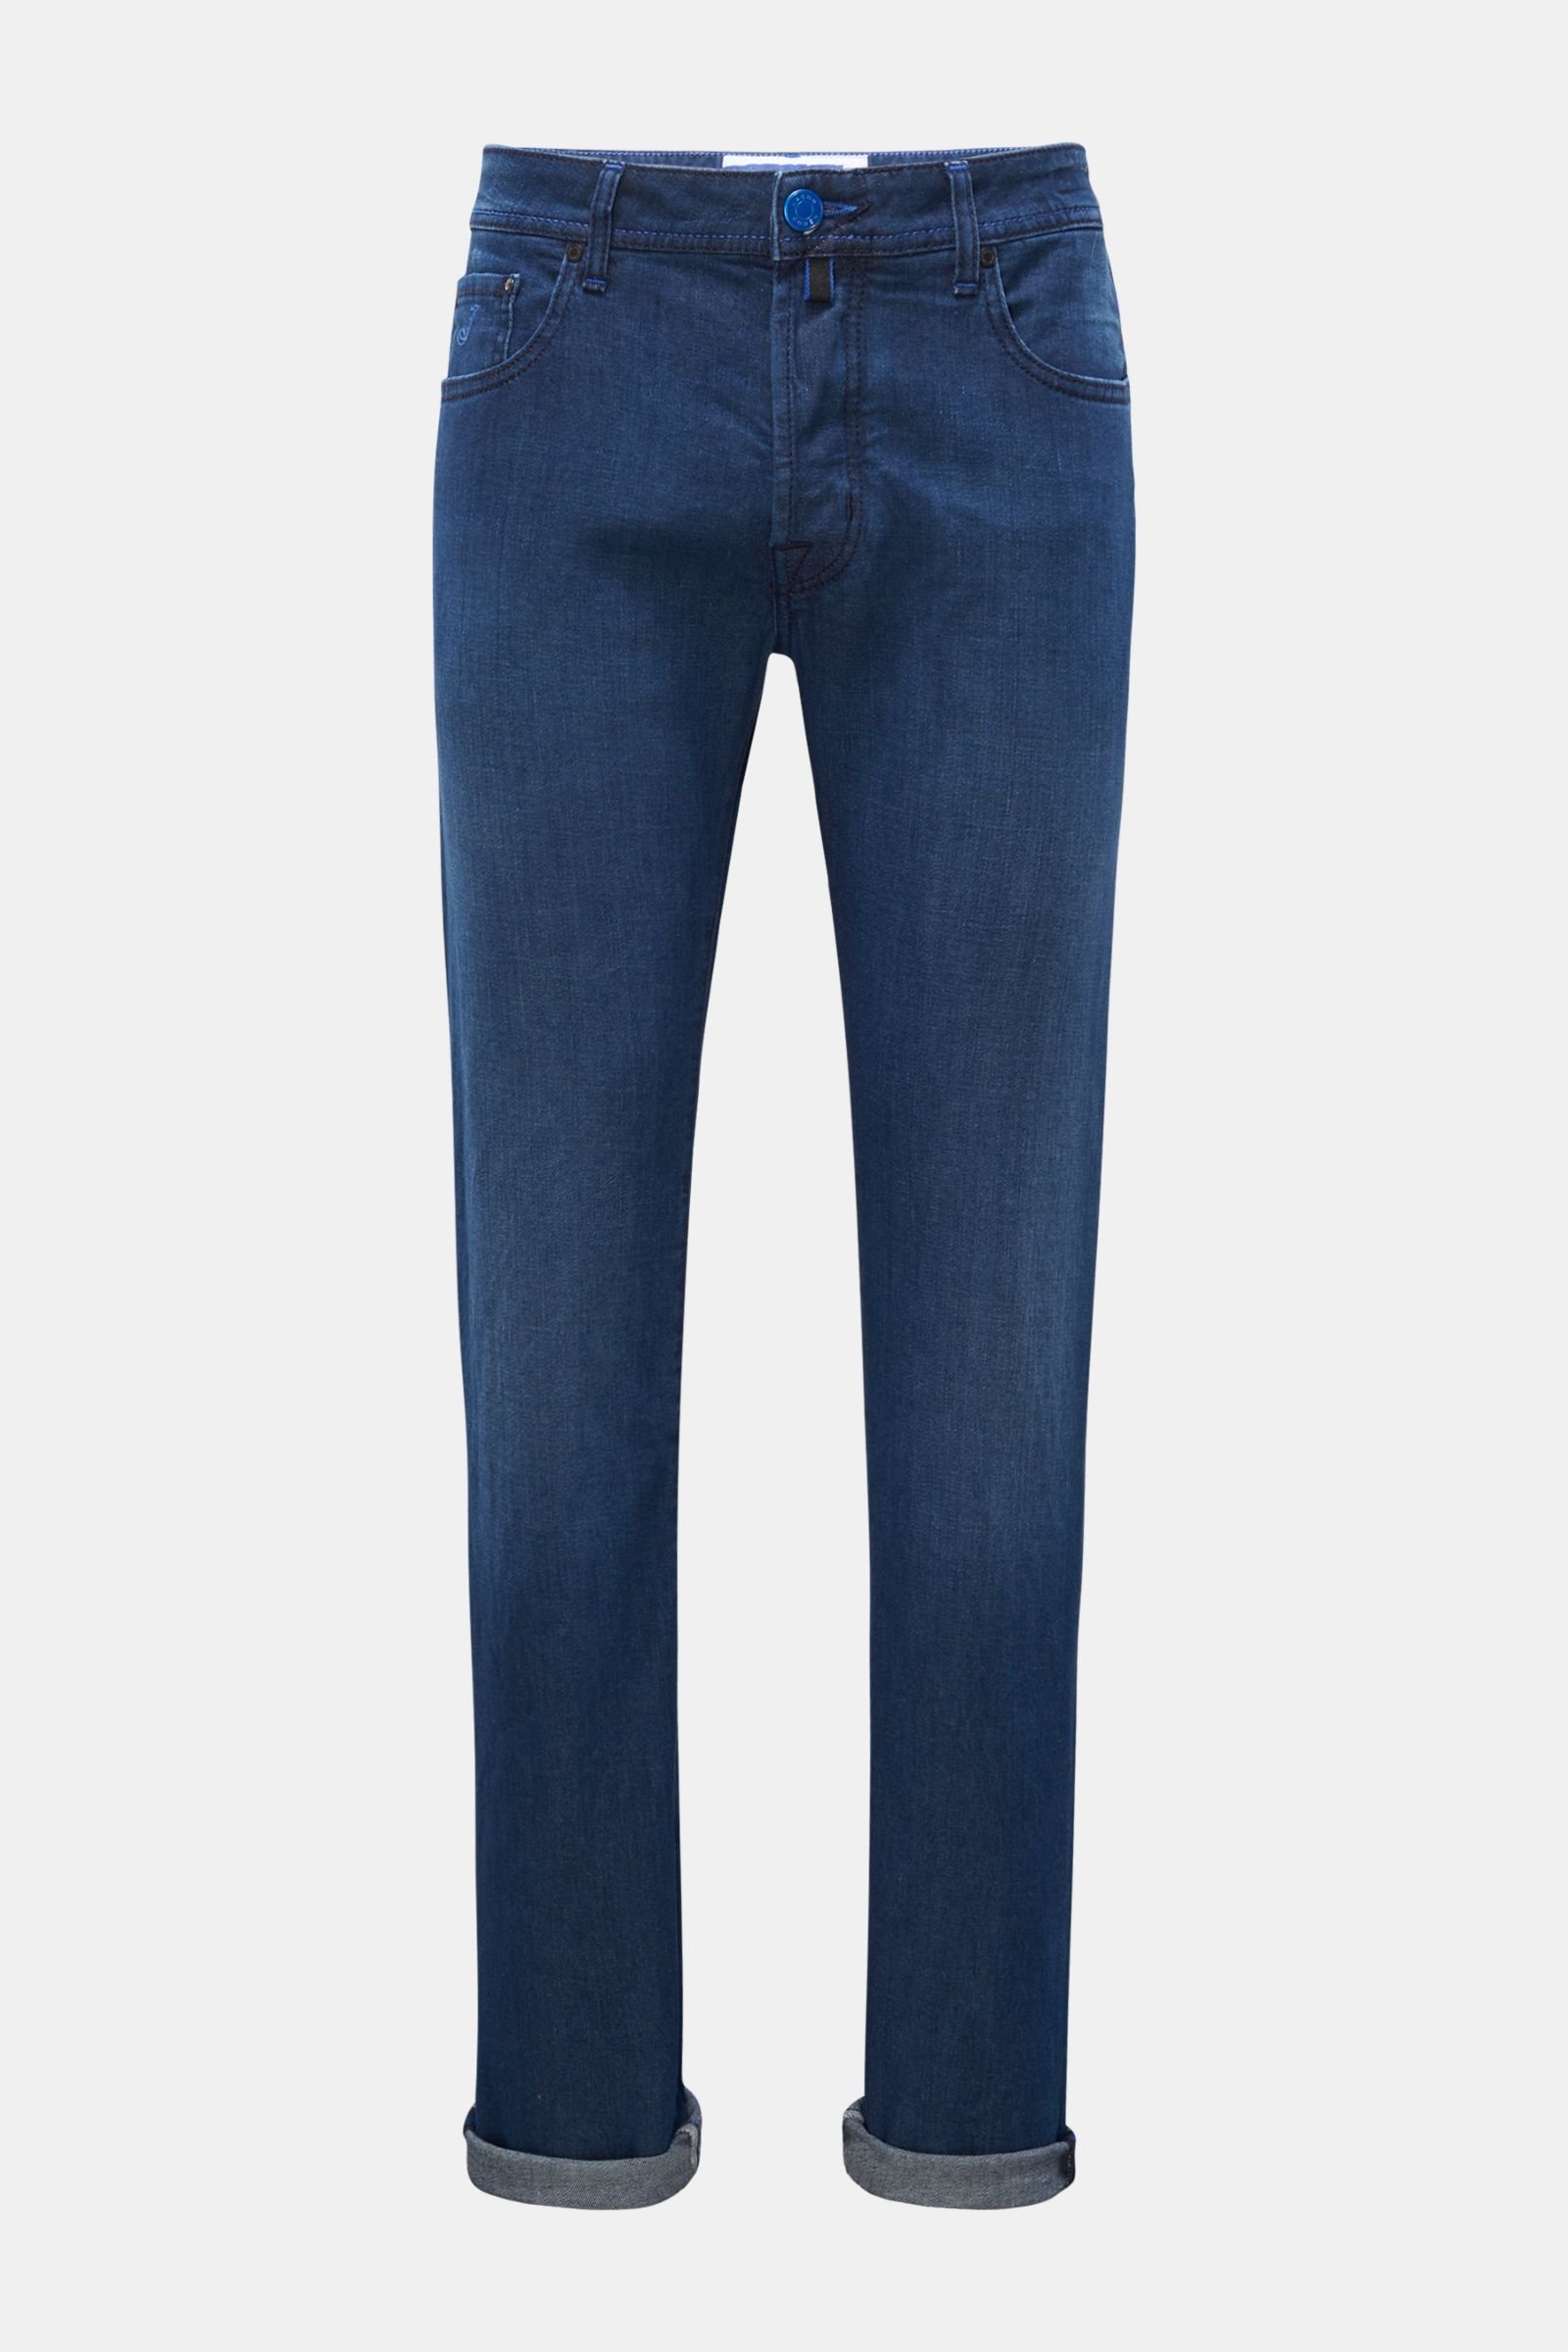 'Bard' jeans navy (previously J688)